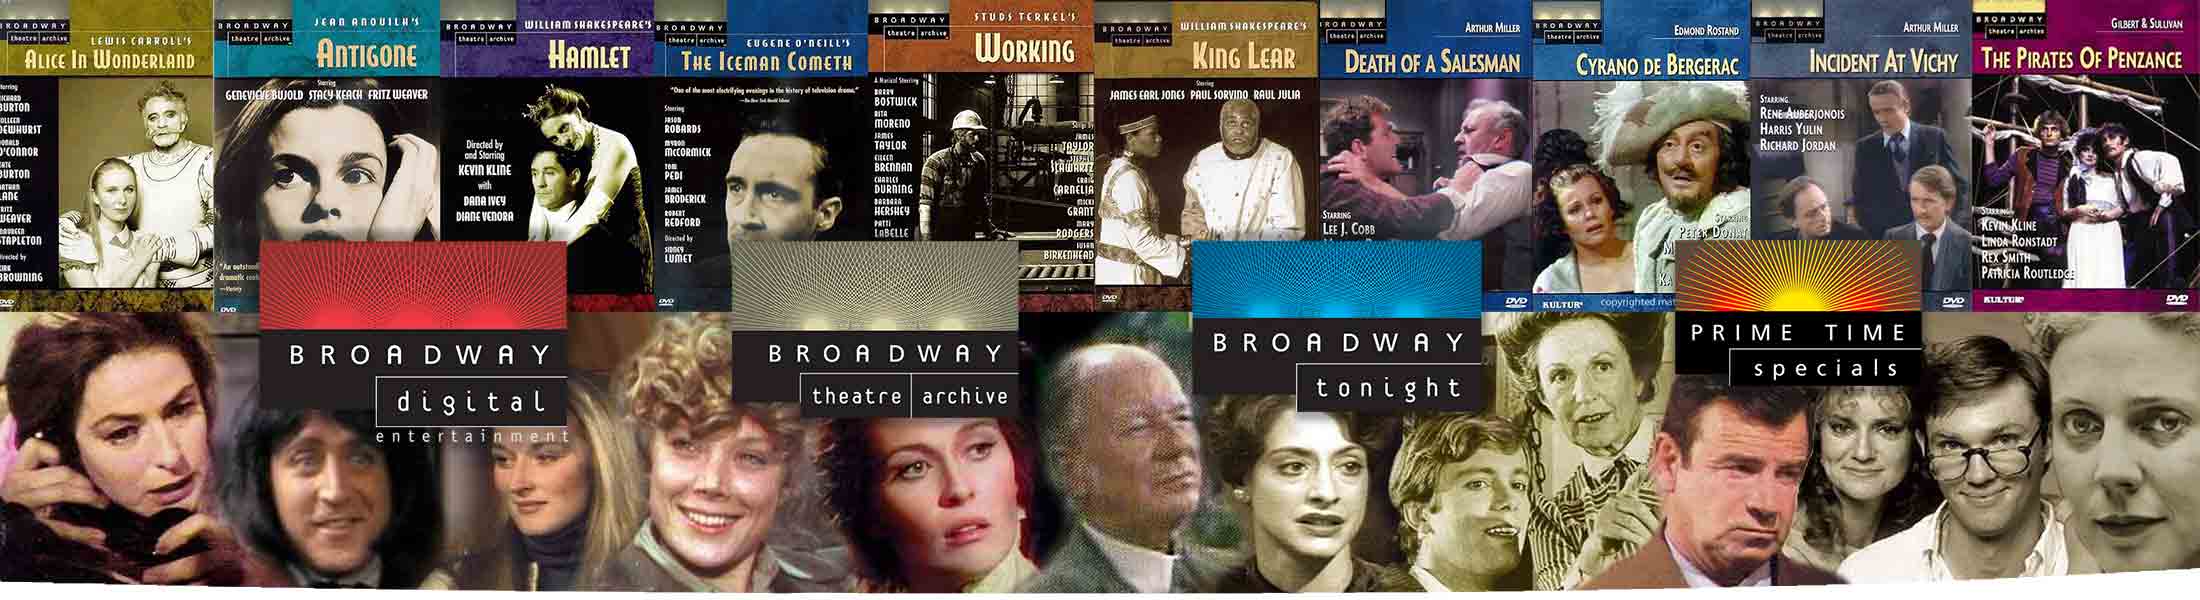 Broadway Theatre Archive Broadway Digital Entertainment Broadway Tonight